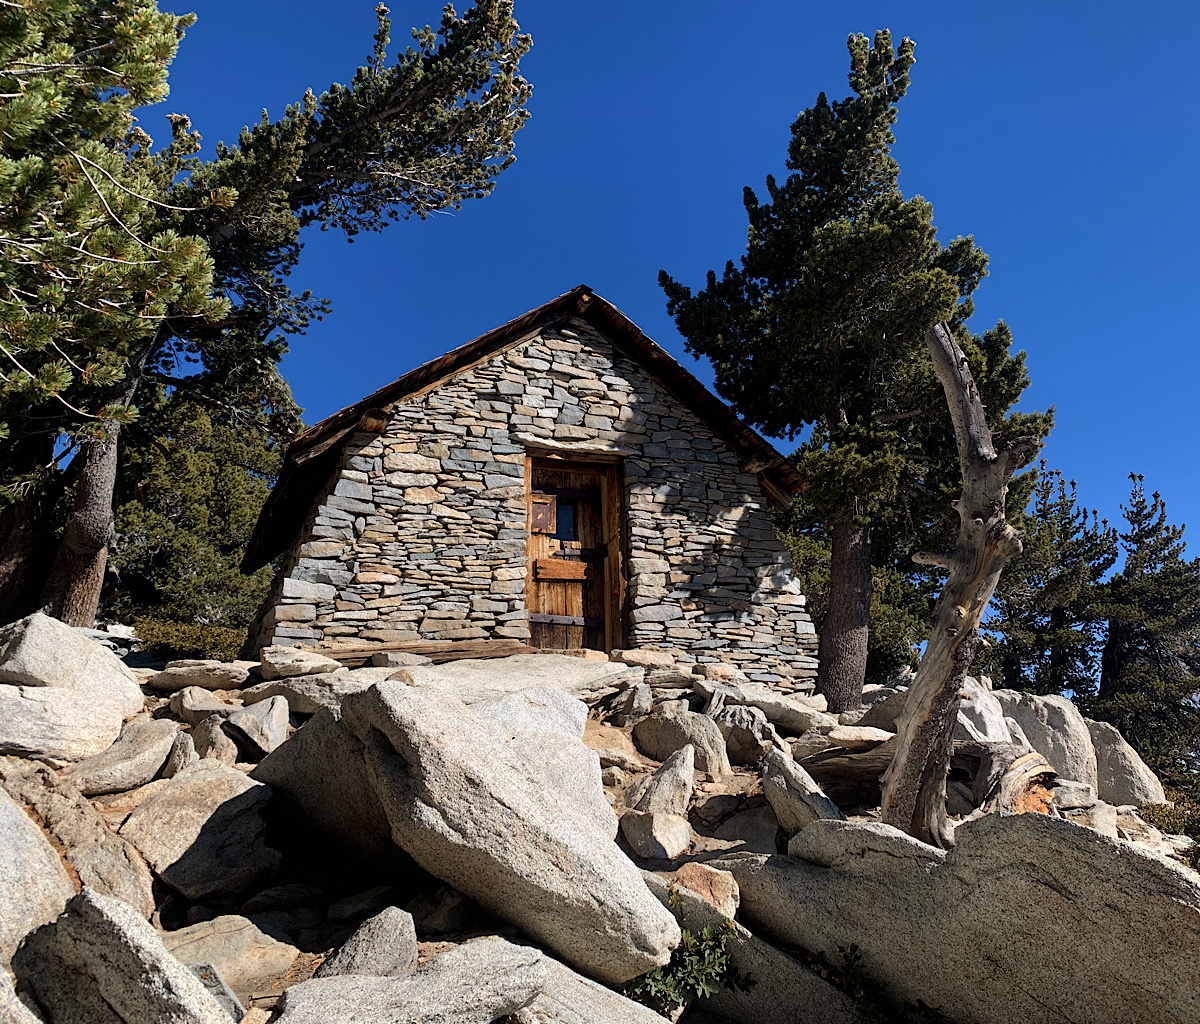 The beautiful CCC emergency hut near the summit of San Jacinto Peak.